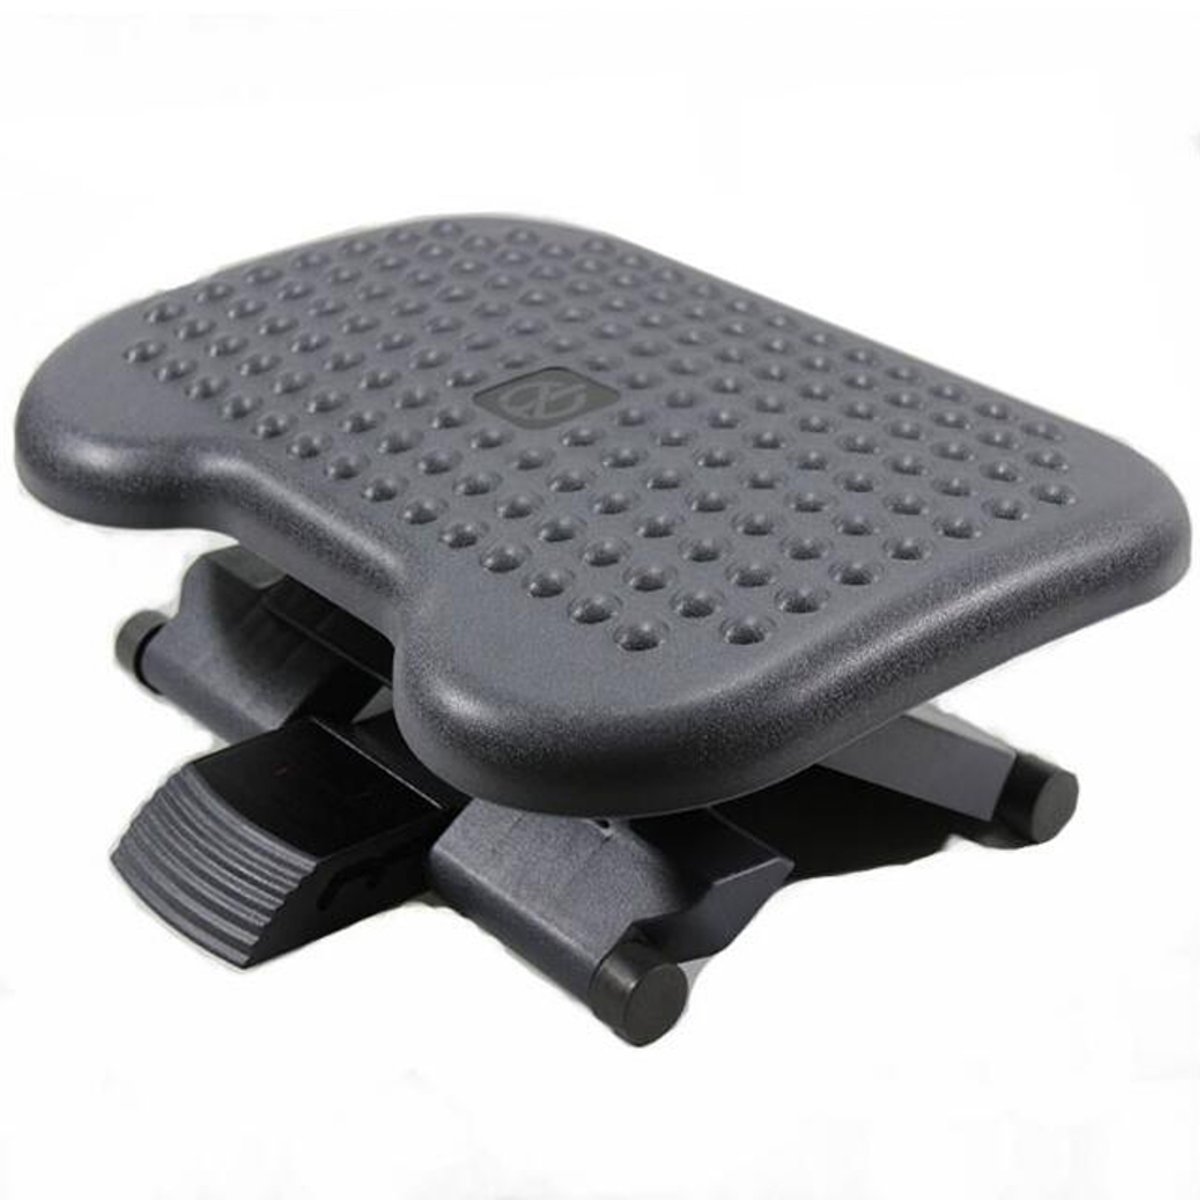 Adjustable Tilting Footrest Under Desk Ergonomic Office Foot Rest Pad Footstool Foot Pegs 8